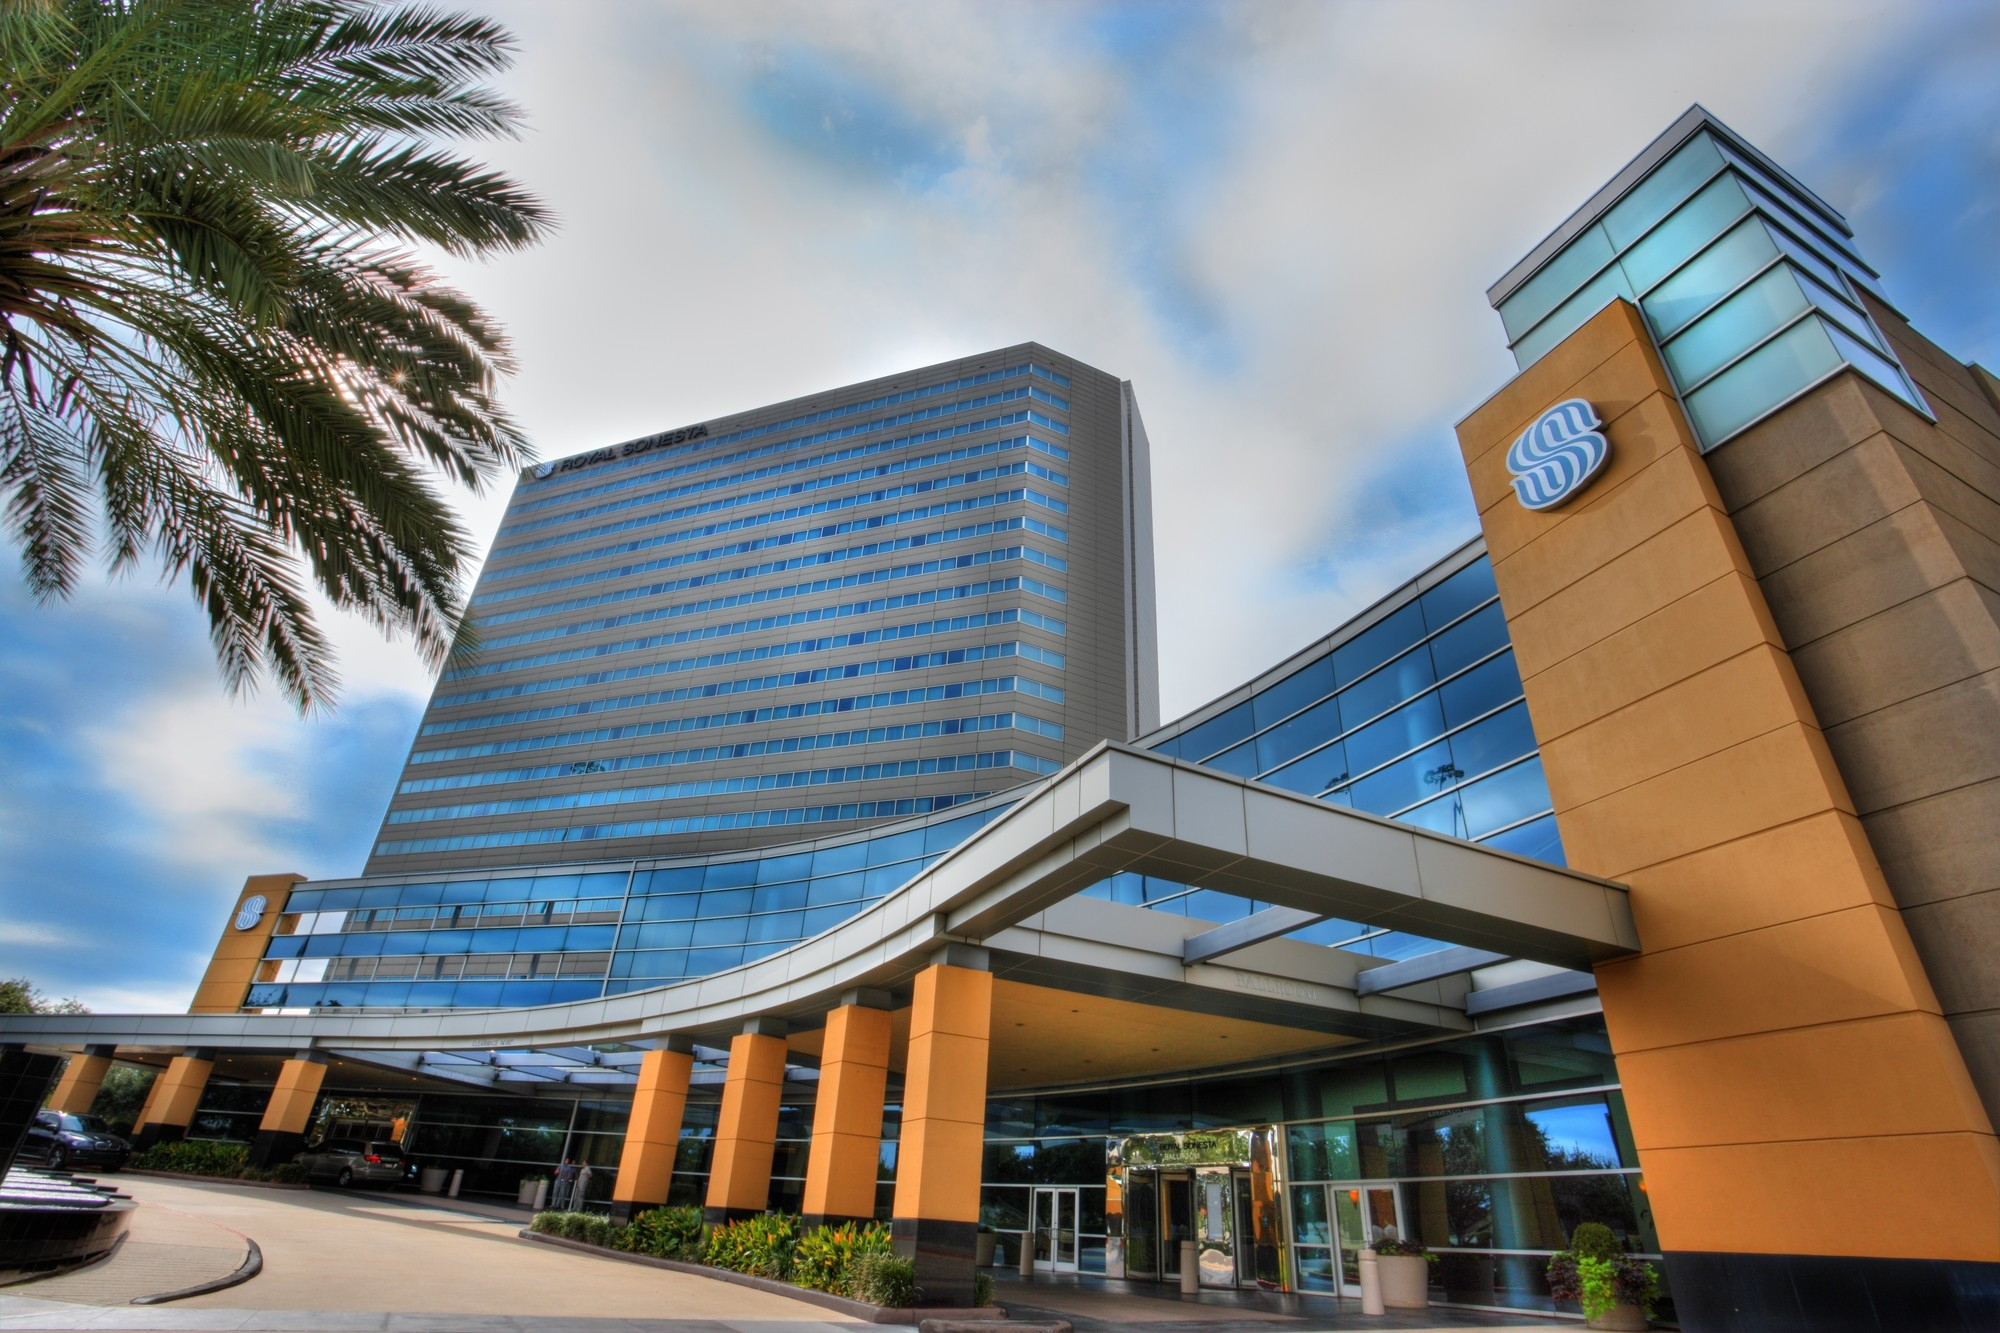 Houston Galleria Hotel | Luxury Houston Hotel | Royal Sonesta - Map Of Hotels In Houston Texas